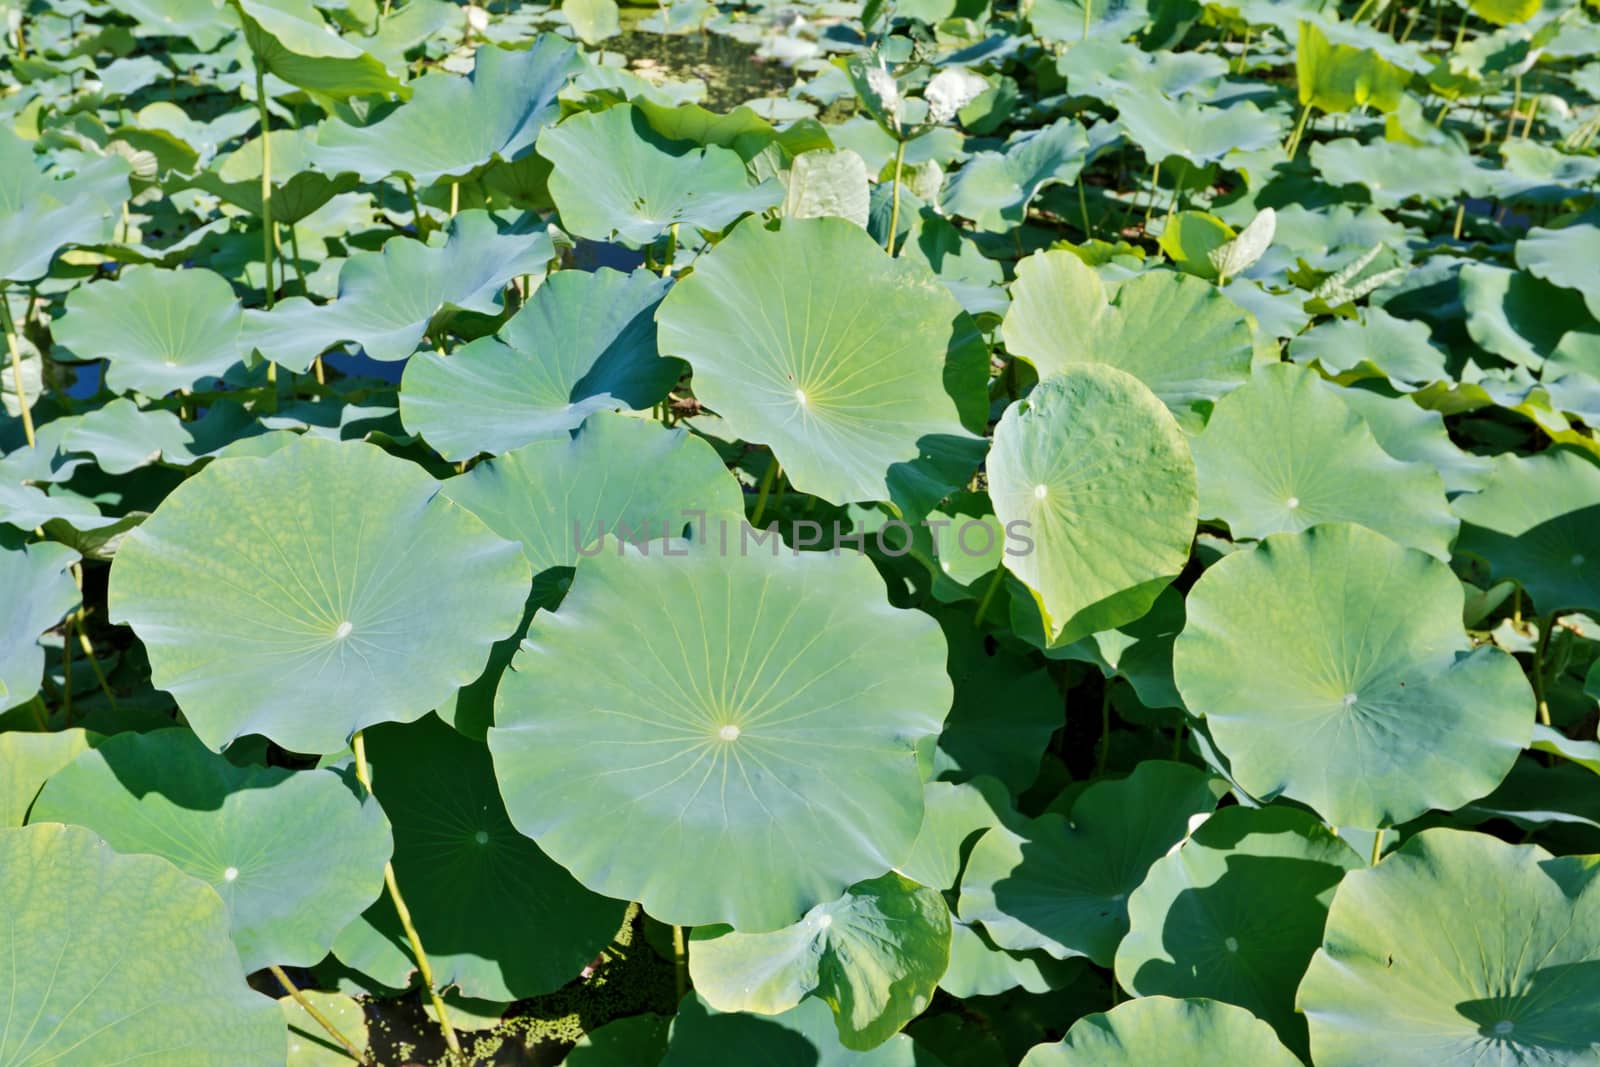 Lotus leaves on a pond filling frame by dsmsoft